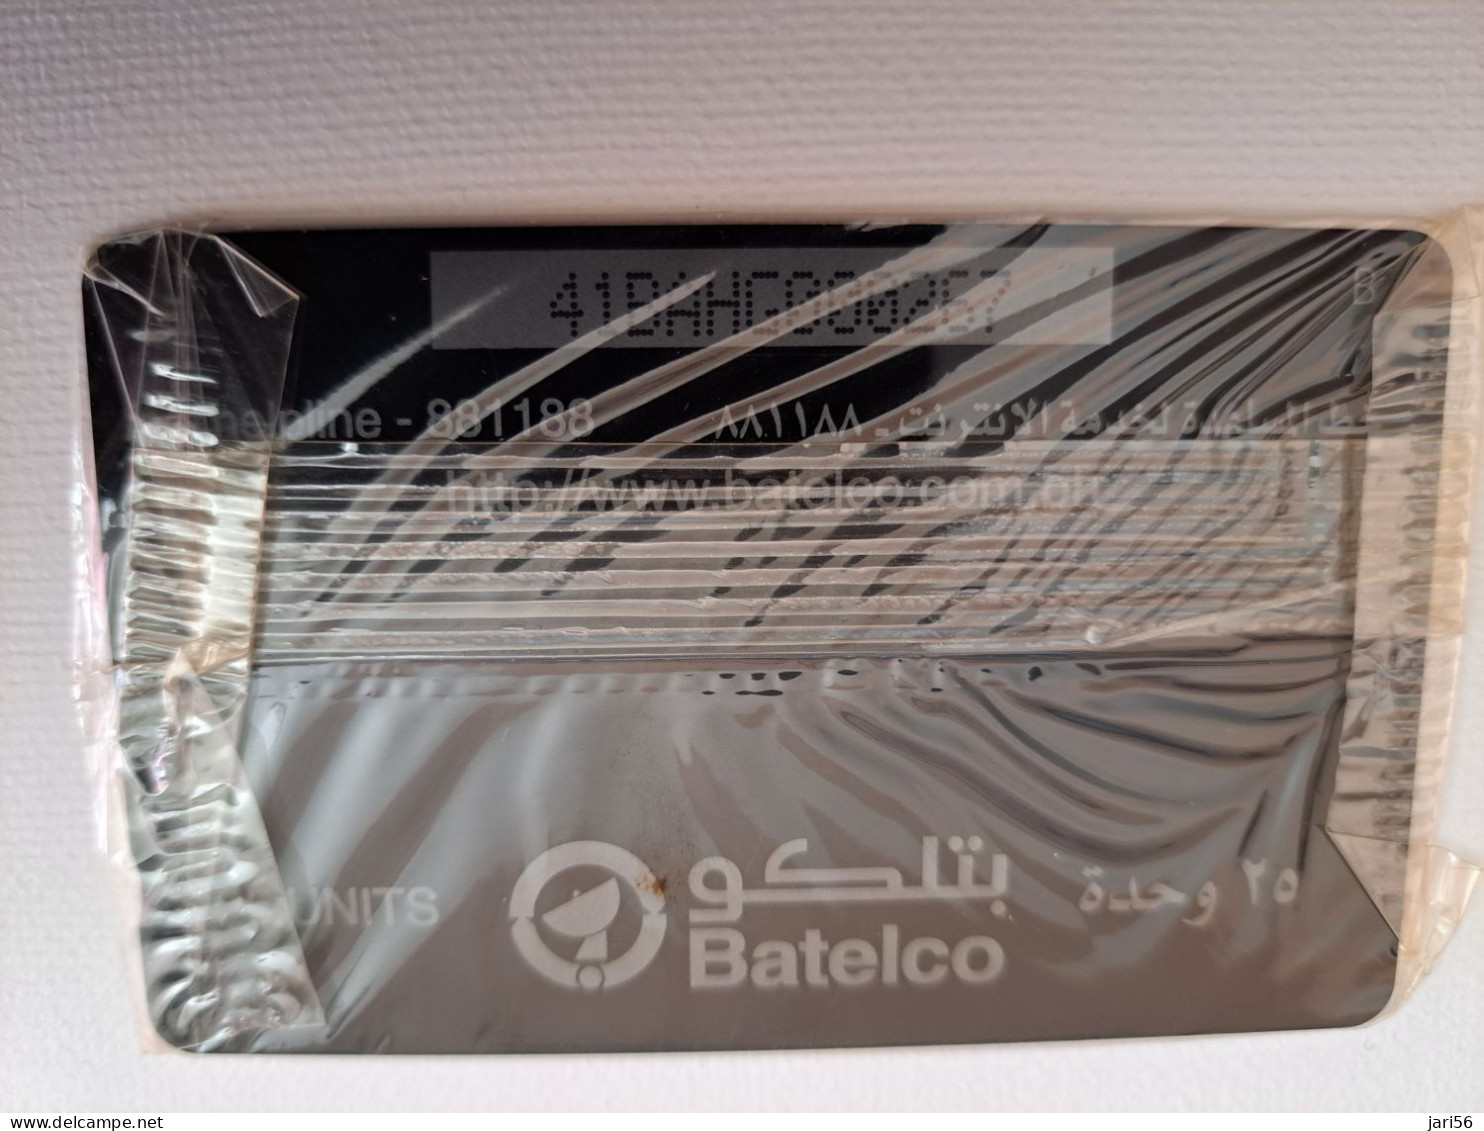 BAHRAIN   GPT CARD  25 UNITS/   /  MINT CARD IN WRAPPER/ INET/  !!!  / BHN76  / 41BAHG /SHALLOW  NOTCH   **13537** - Bahreïn